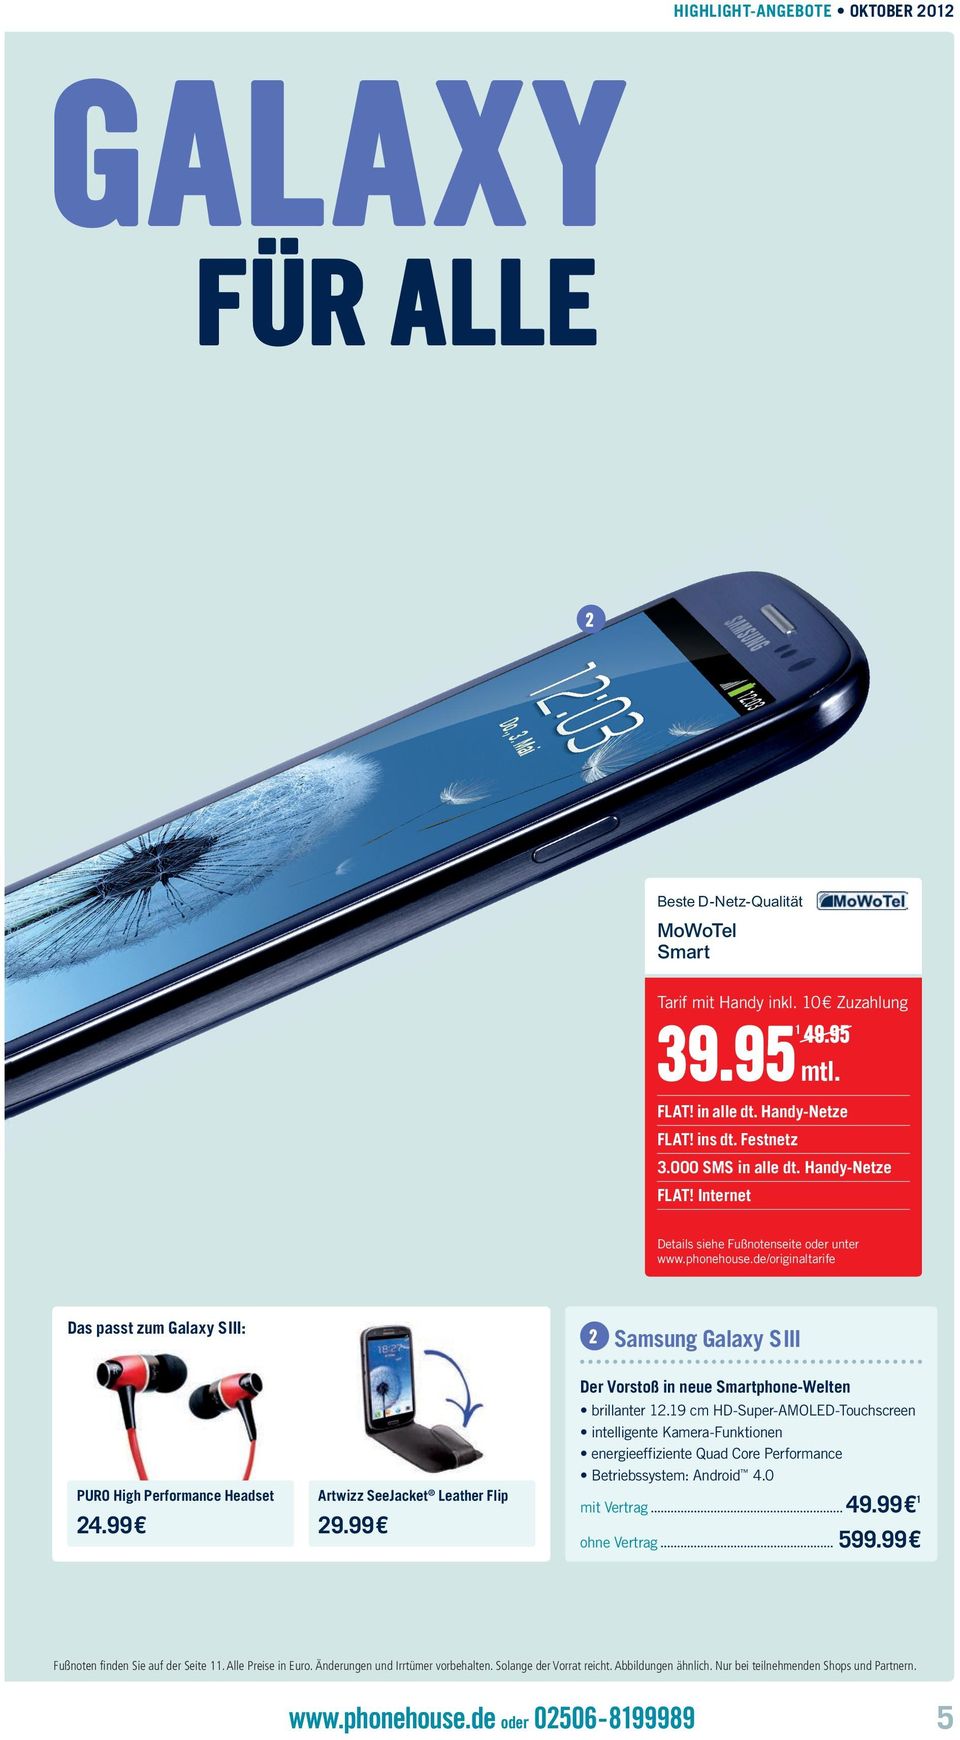 internet Das passt zum Galaxy S iii: 2 Samsung Galaxy S iii puro high performance headset 24.99 Artwizz SeeJacket Leather Flip 29.